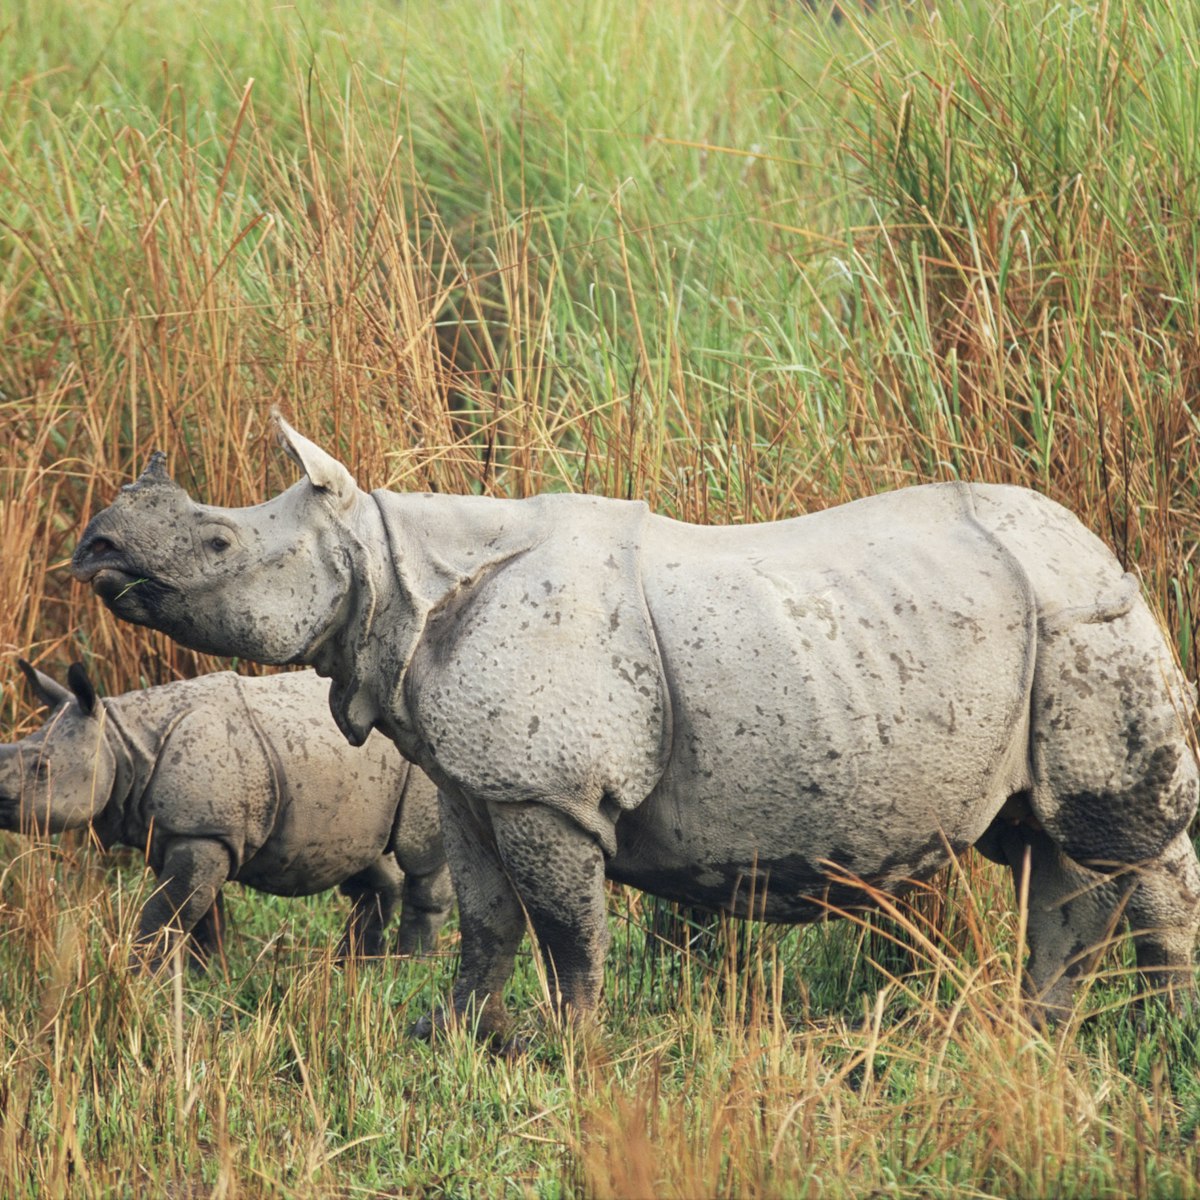 Indian one-horned rhinoceros (rhino), Rhinoceros unicornis, with calf, Kaziranga National Park, Assam, India, Asia